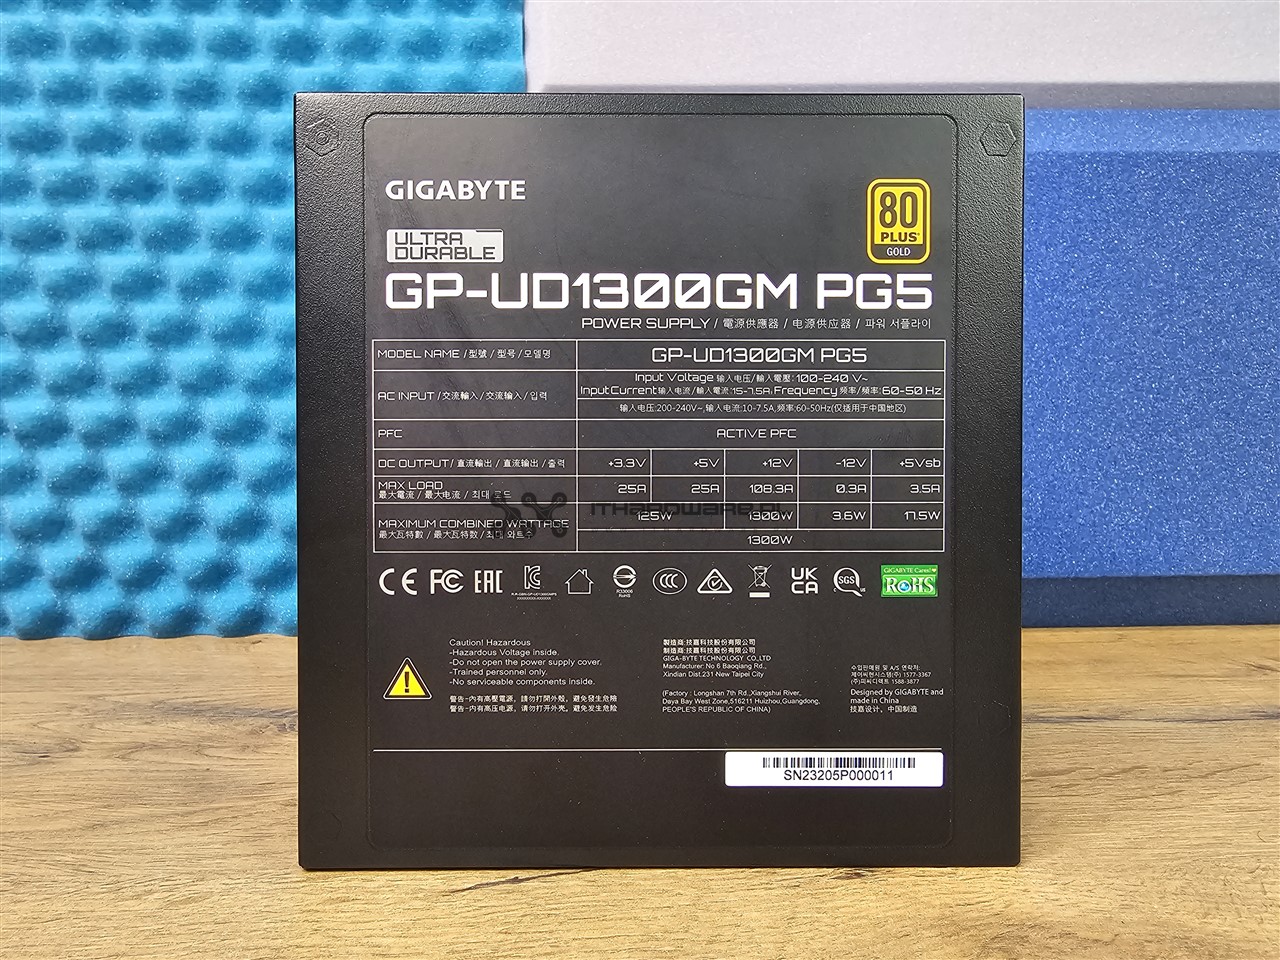 Gigabyte GP-UD1300GM PG5